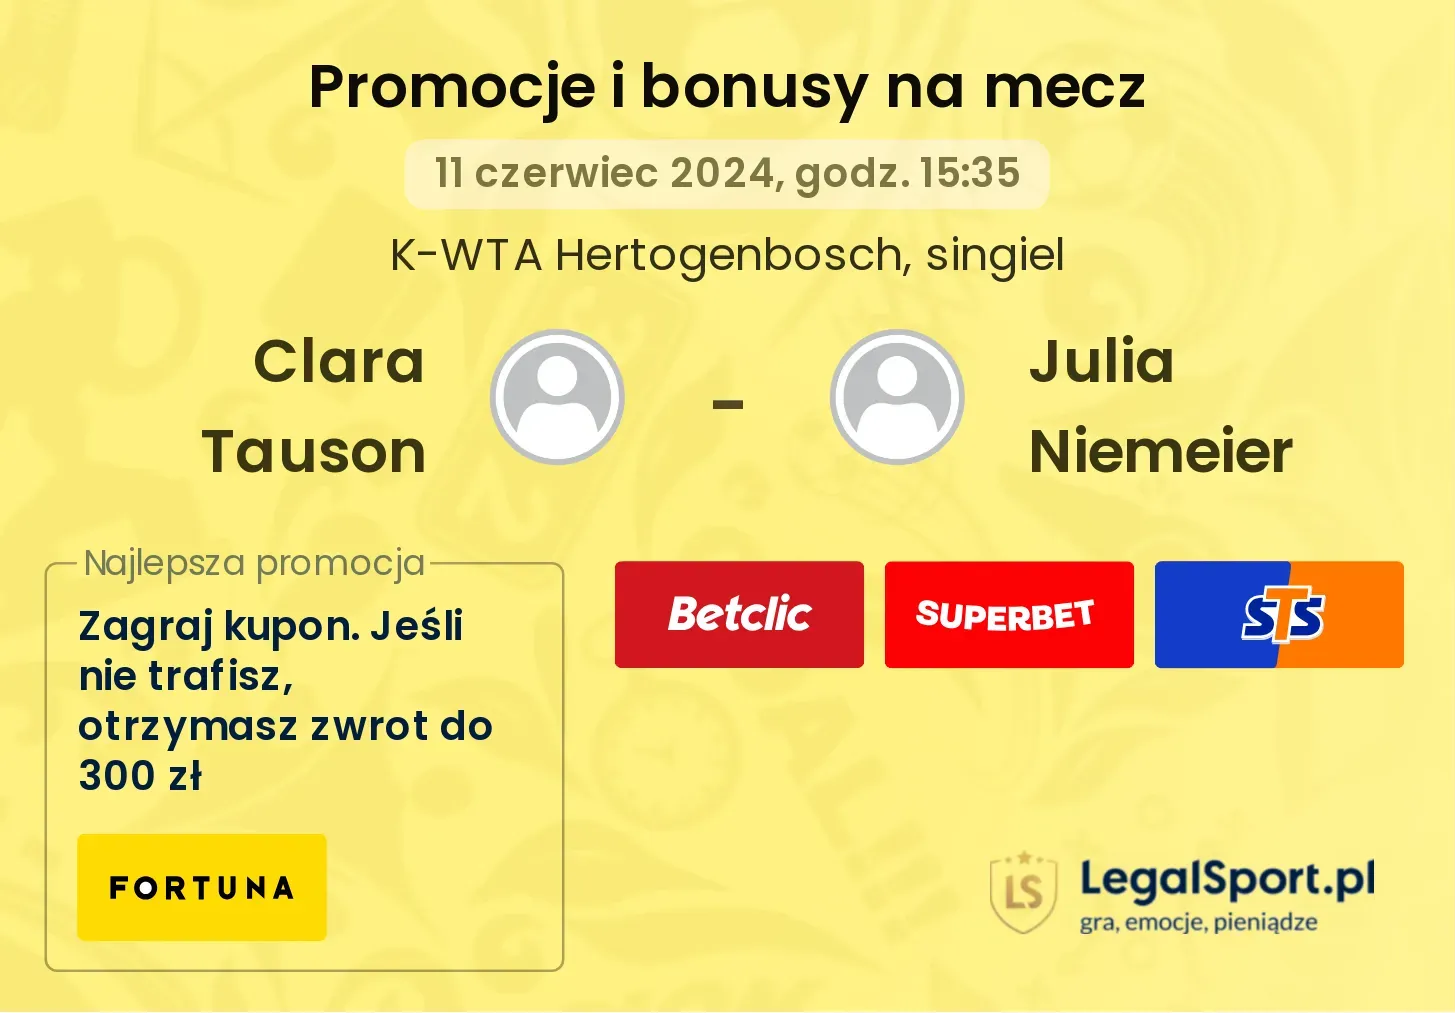 Clara Tauson - Julia Niemeier promocje bonusy na mecz